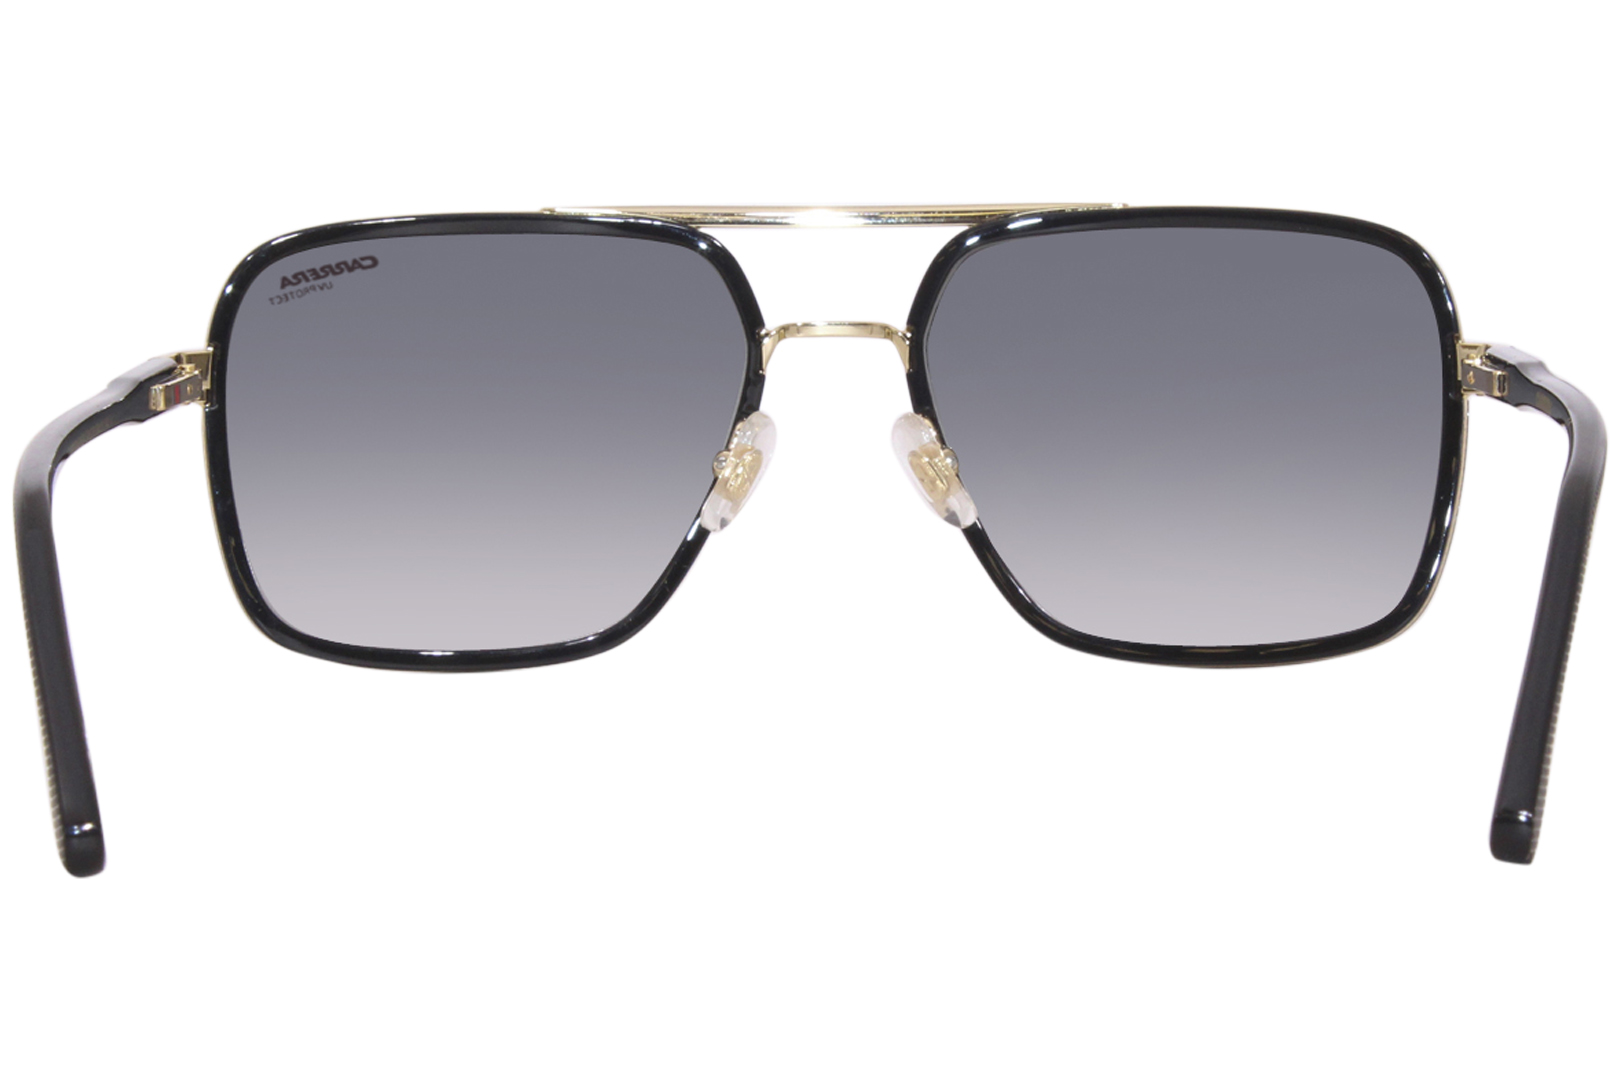 Carrera 256/S Sunglasses Men's Rectangle Shape 